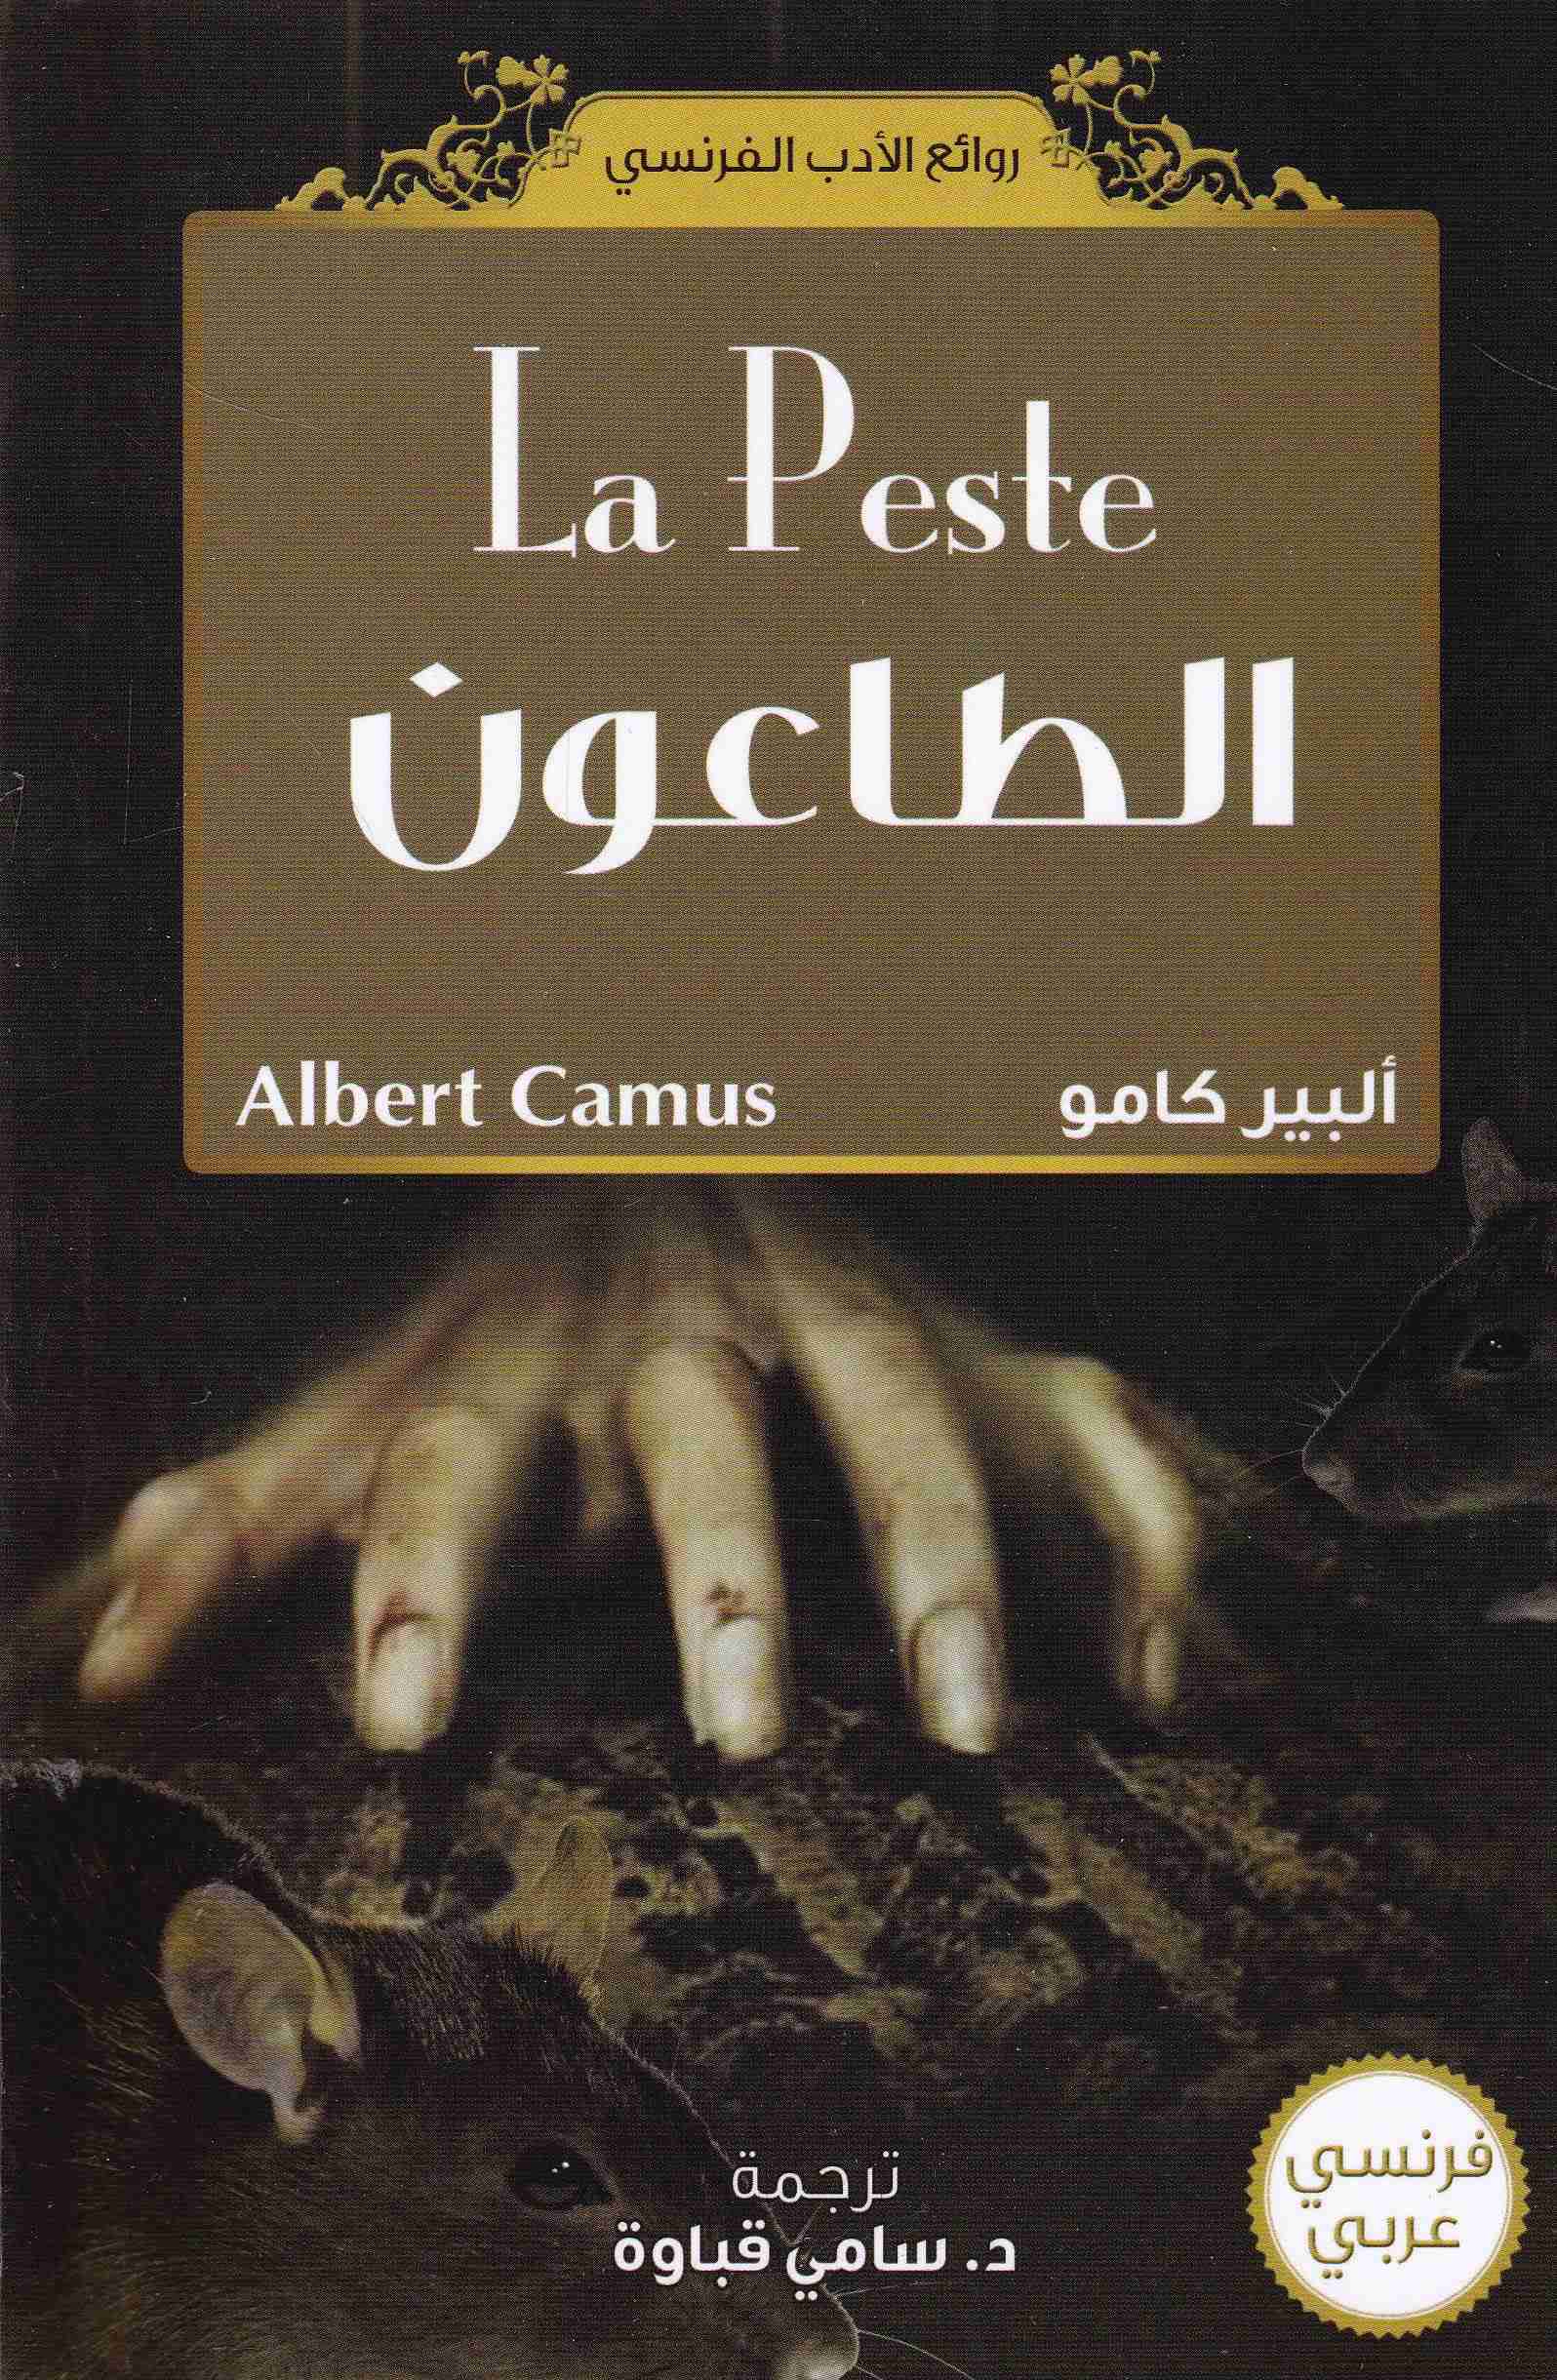 Librairie Bouarroudj - LA PESTE الطاعون فرنسي-عربي